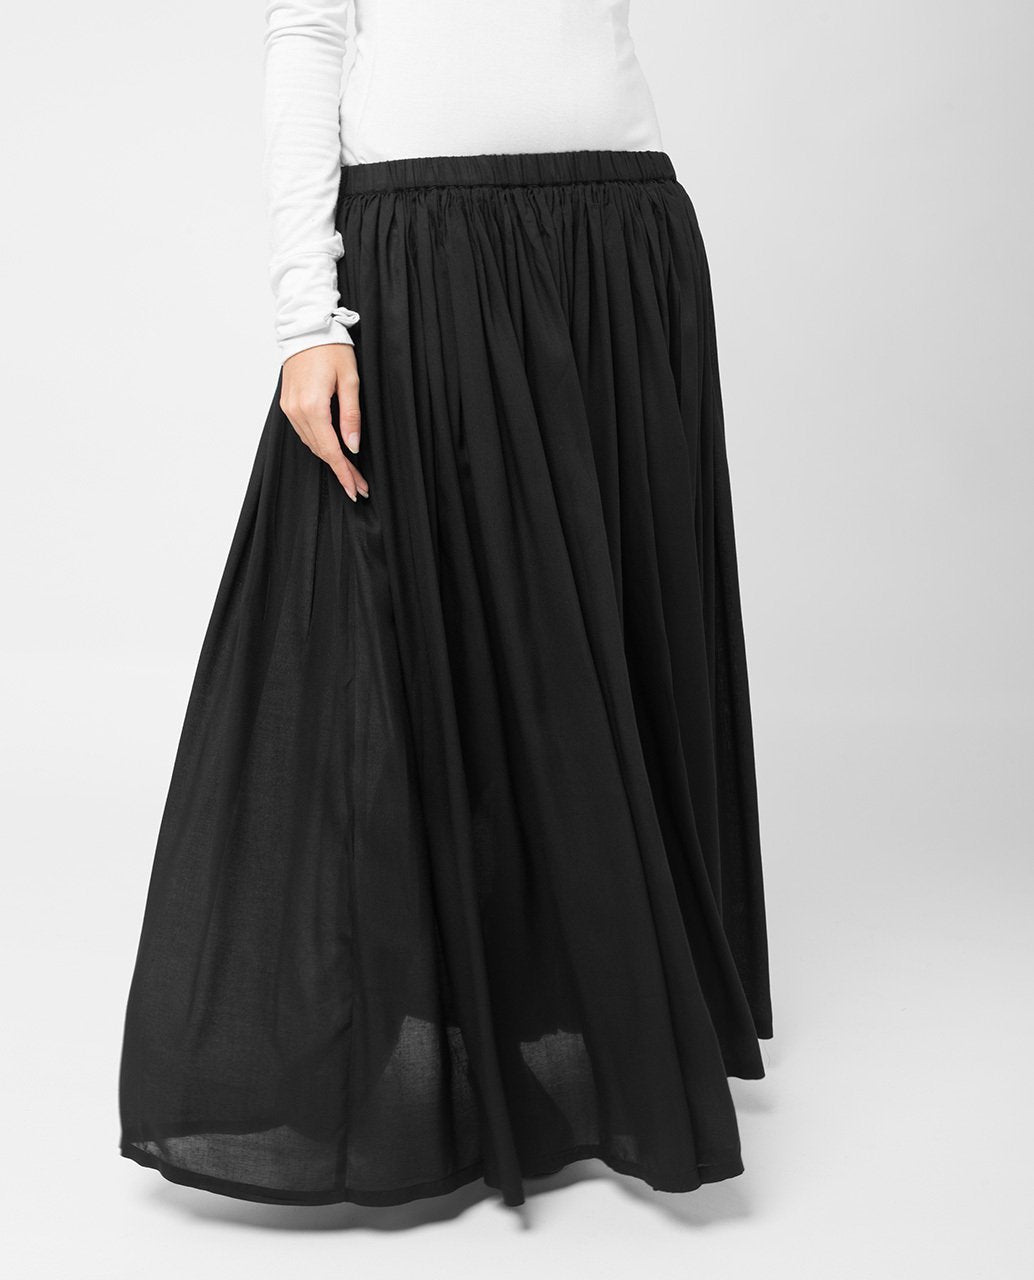 Black Pleated Skirt Petite (W28 L28) Black 